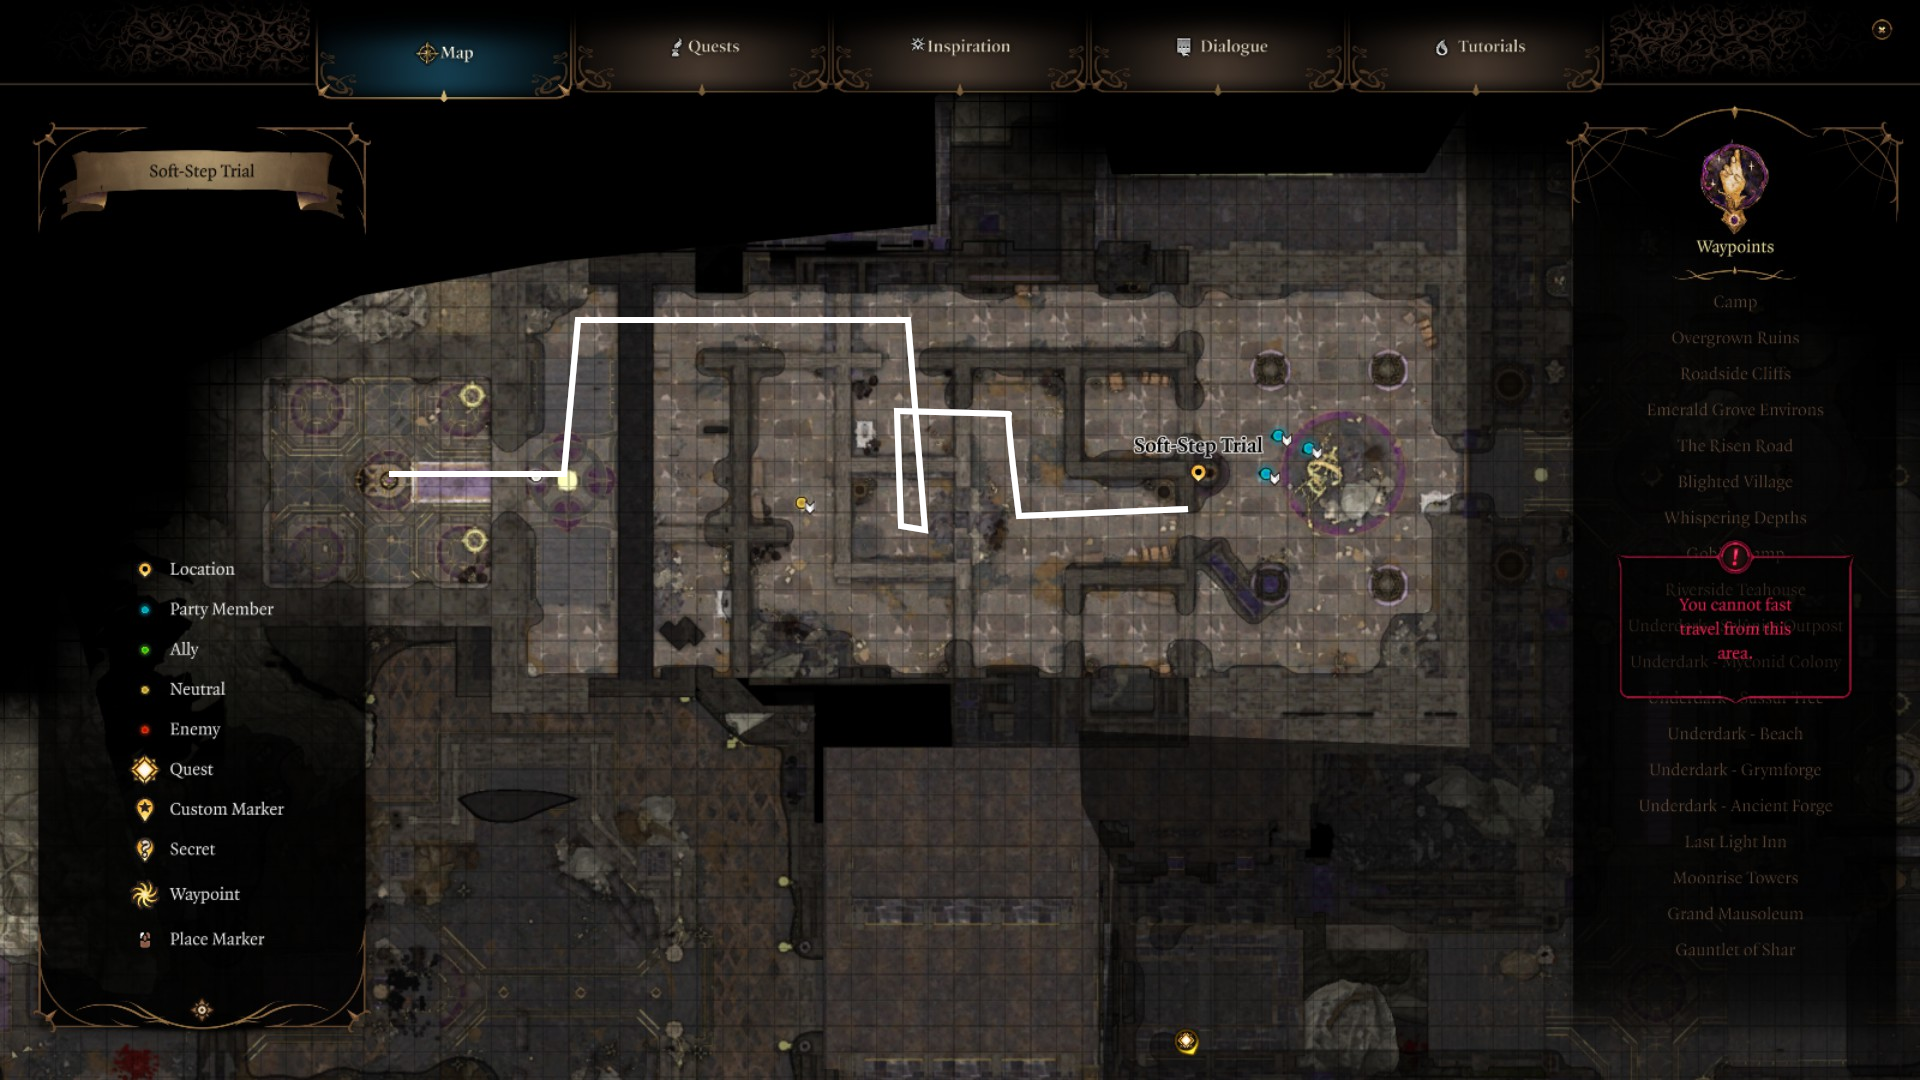 An image showing the path taken through the Soft-Step trial in Baldur's Gate 3.